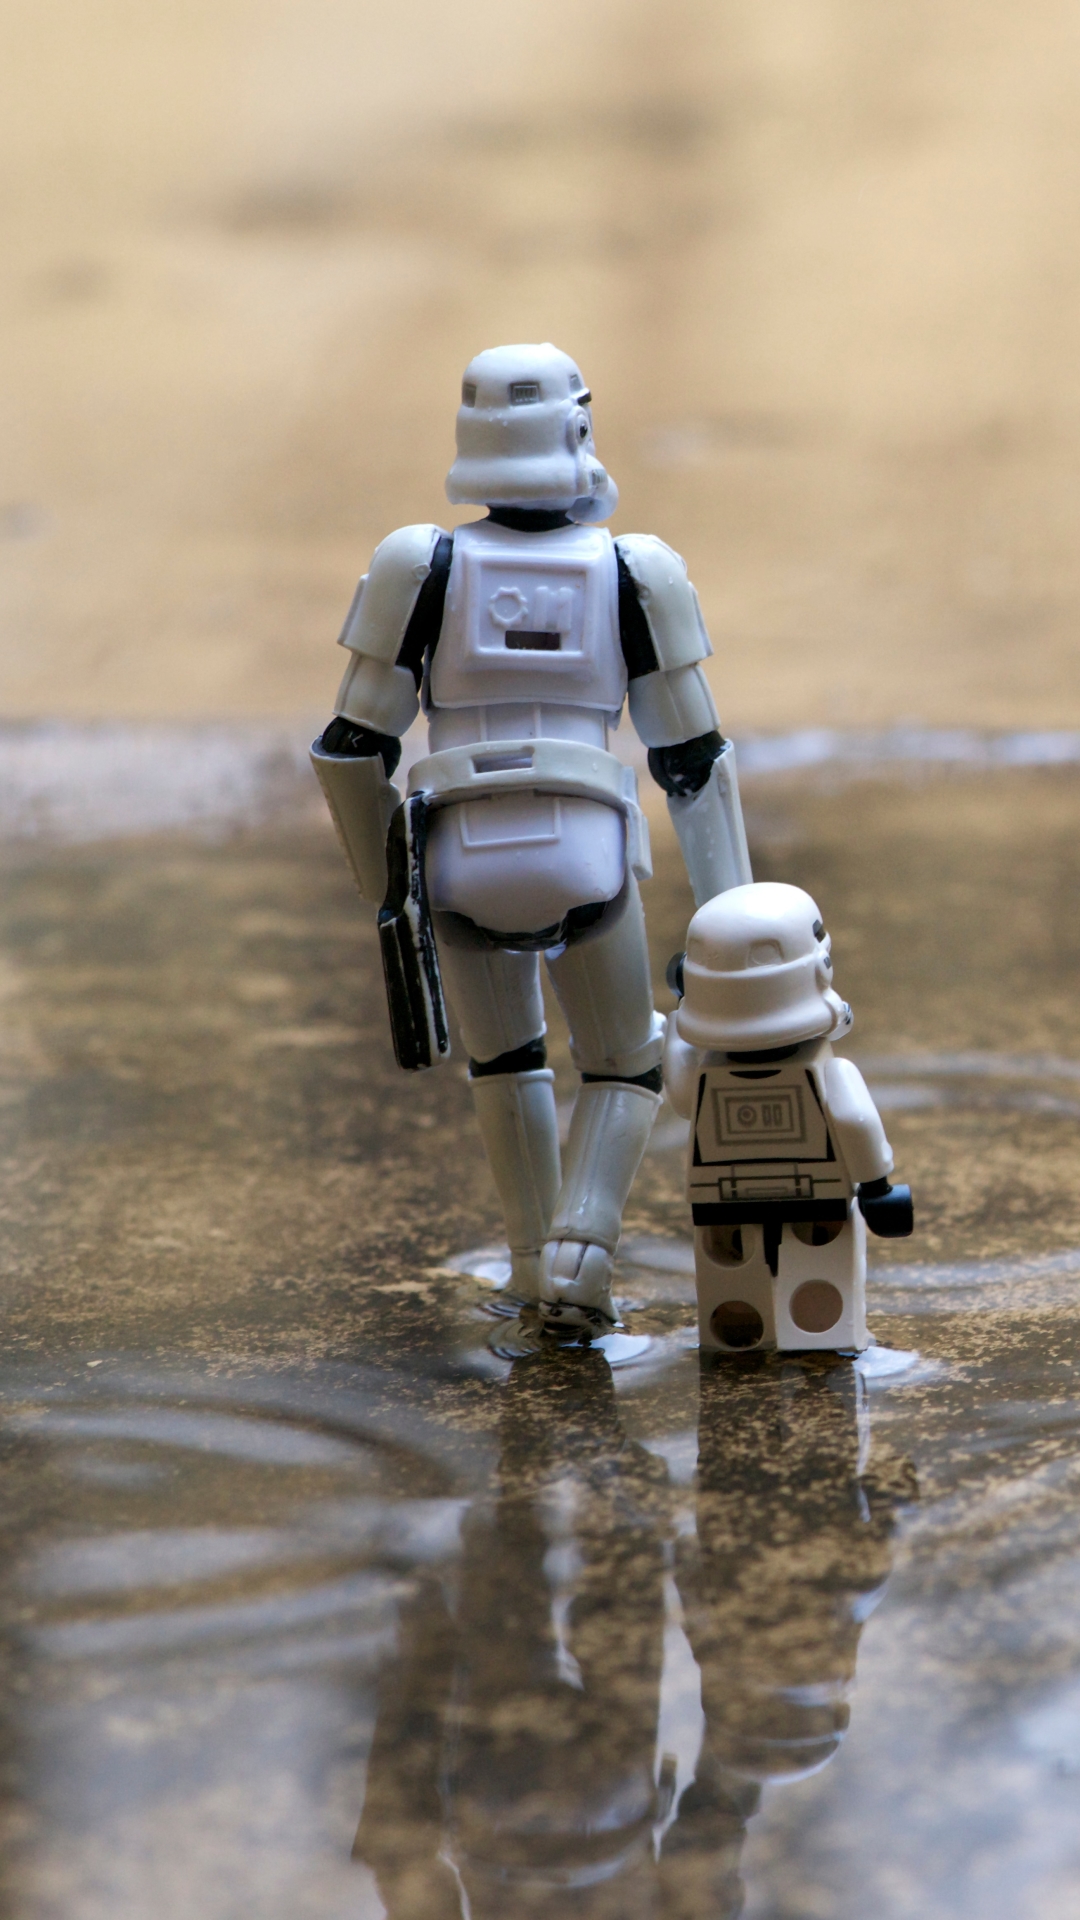 Sci Fi Star Wars Star Wars Lego Funny Humor Toy Mobile Wallpaper